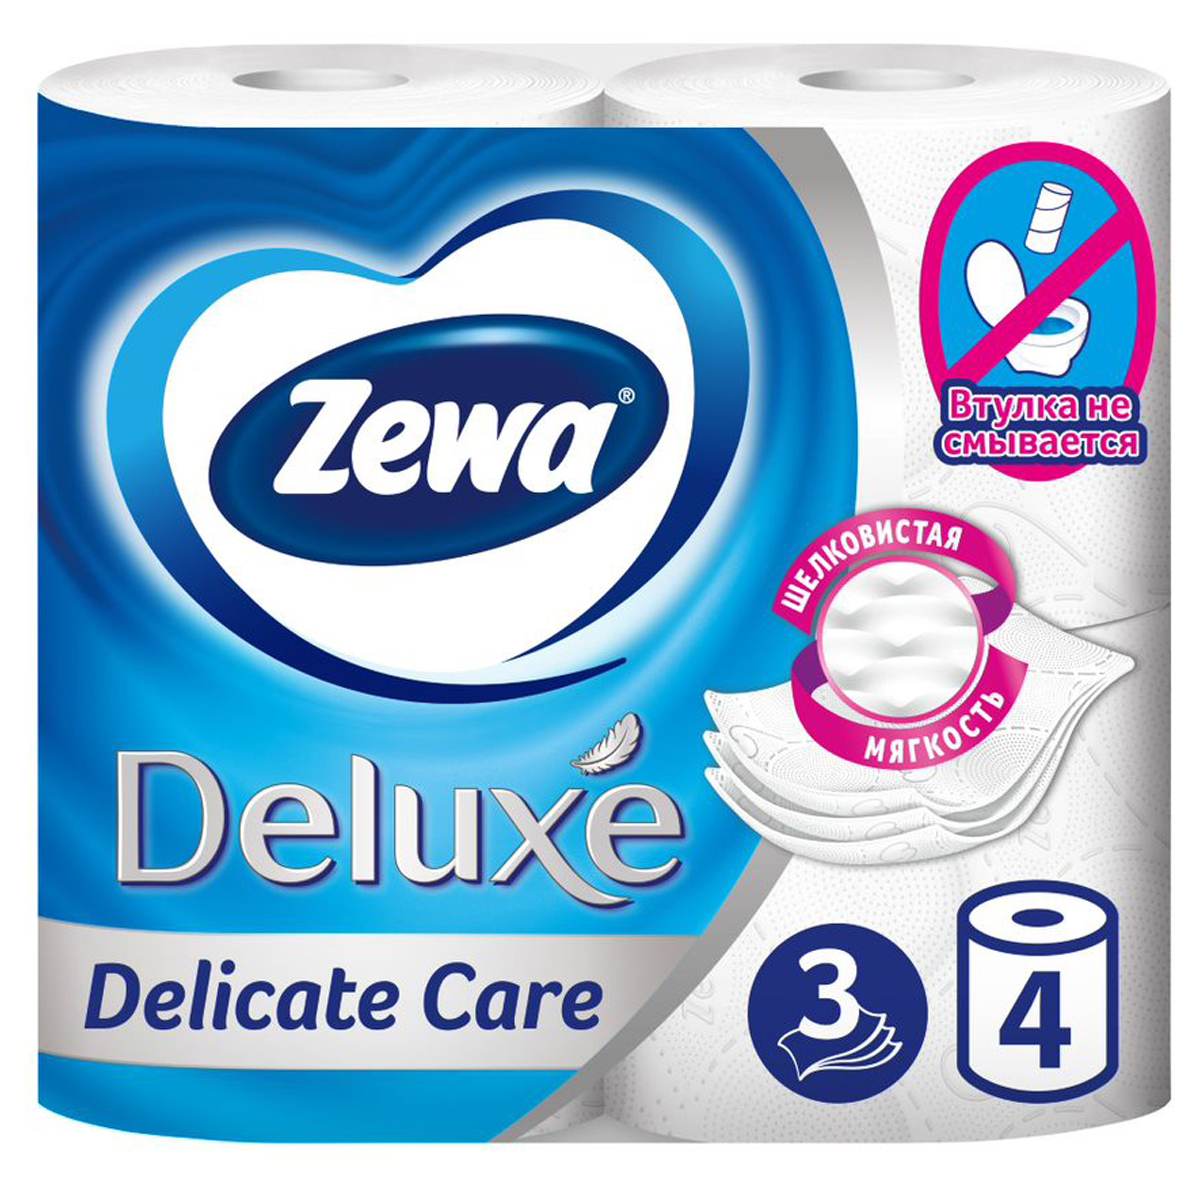 Бумага туалетная Zewa "Deluxe" 3-слойная, 4шт., тиснение, белая